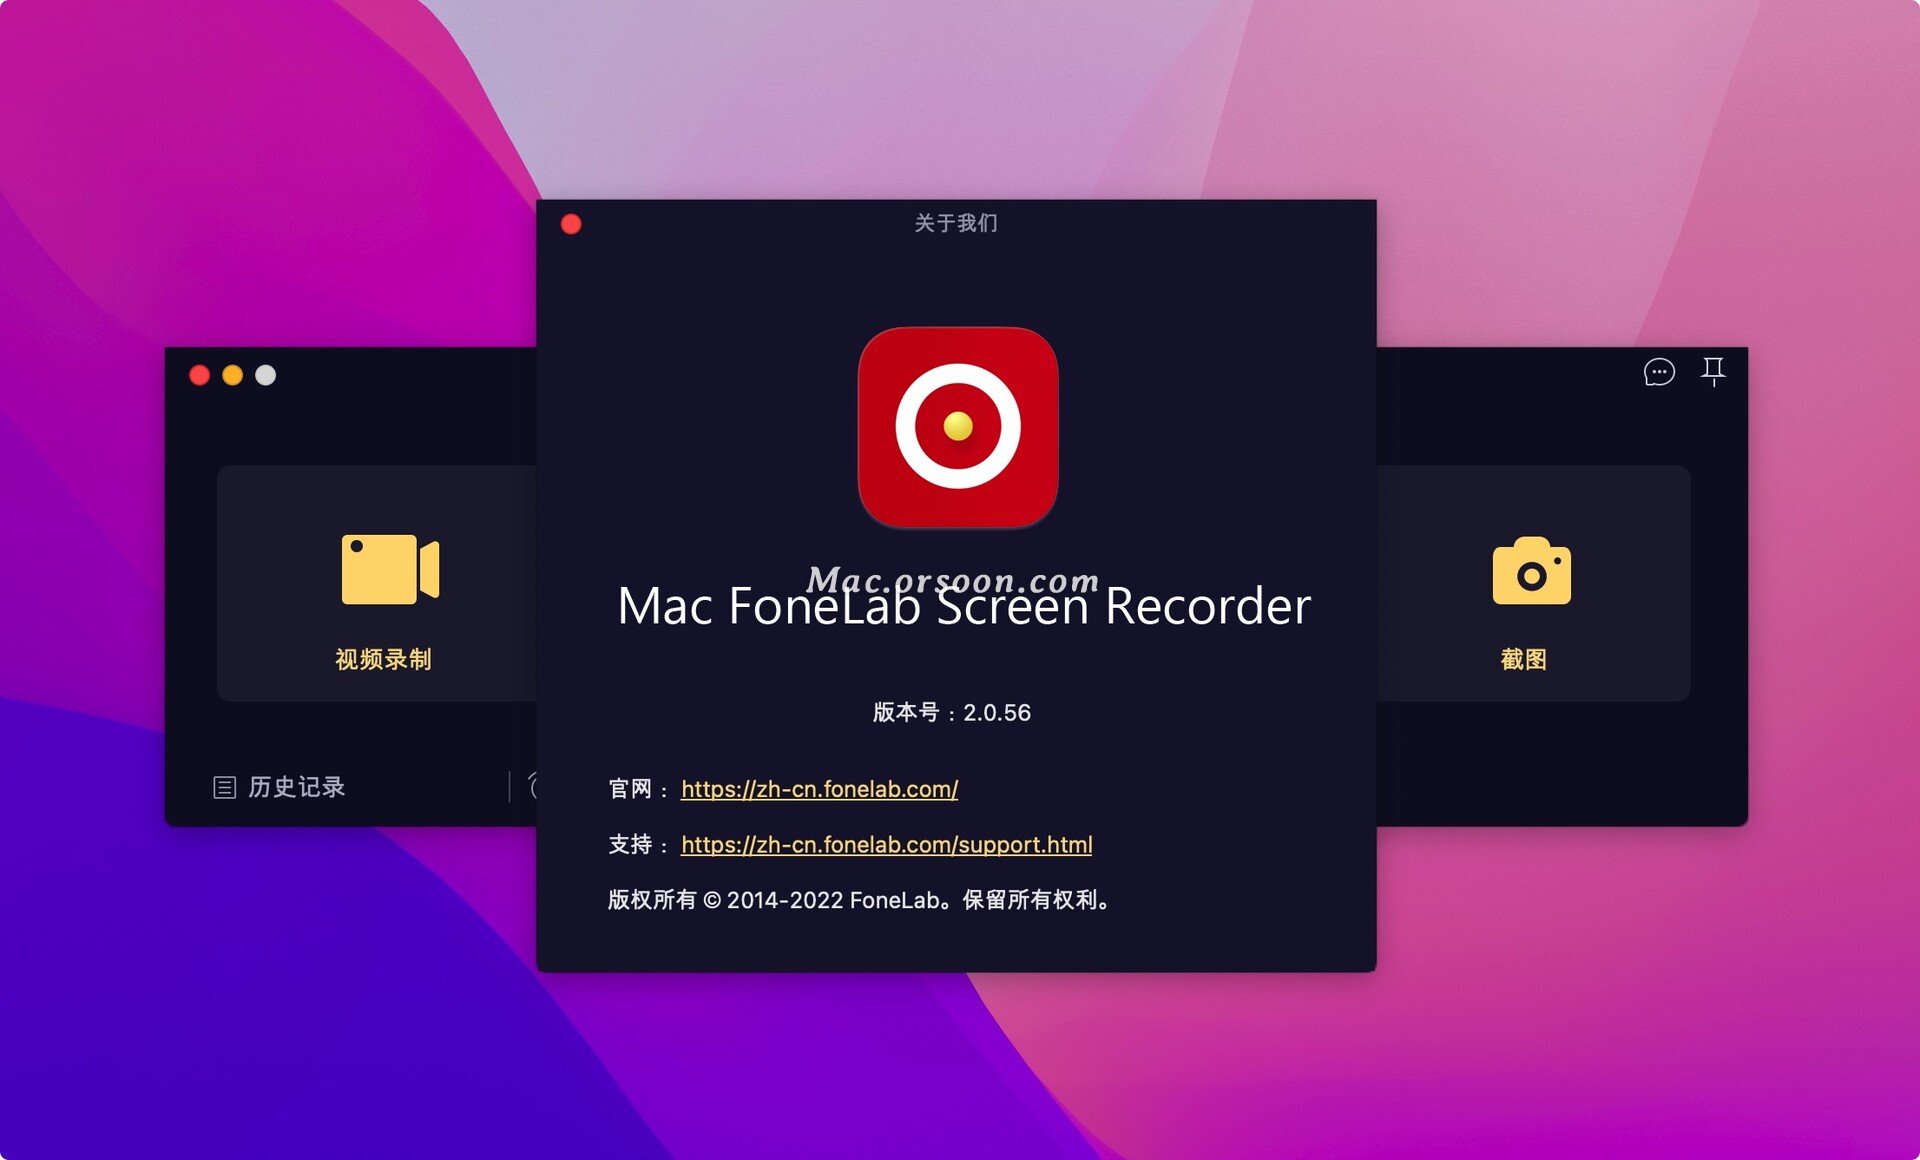 mac mac 的 FoneLab 屏幕录像机（屏幕录像机